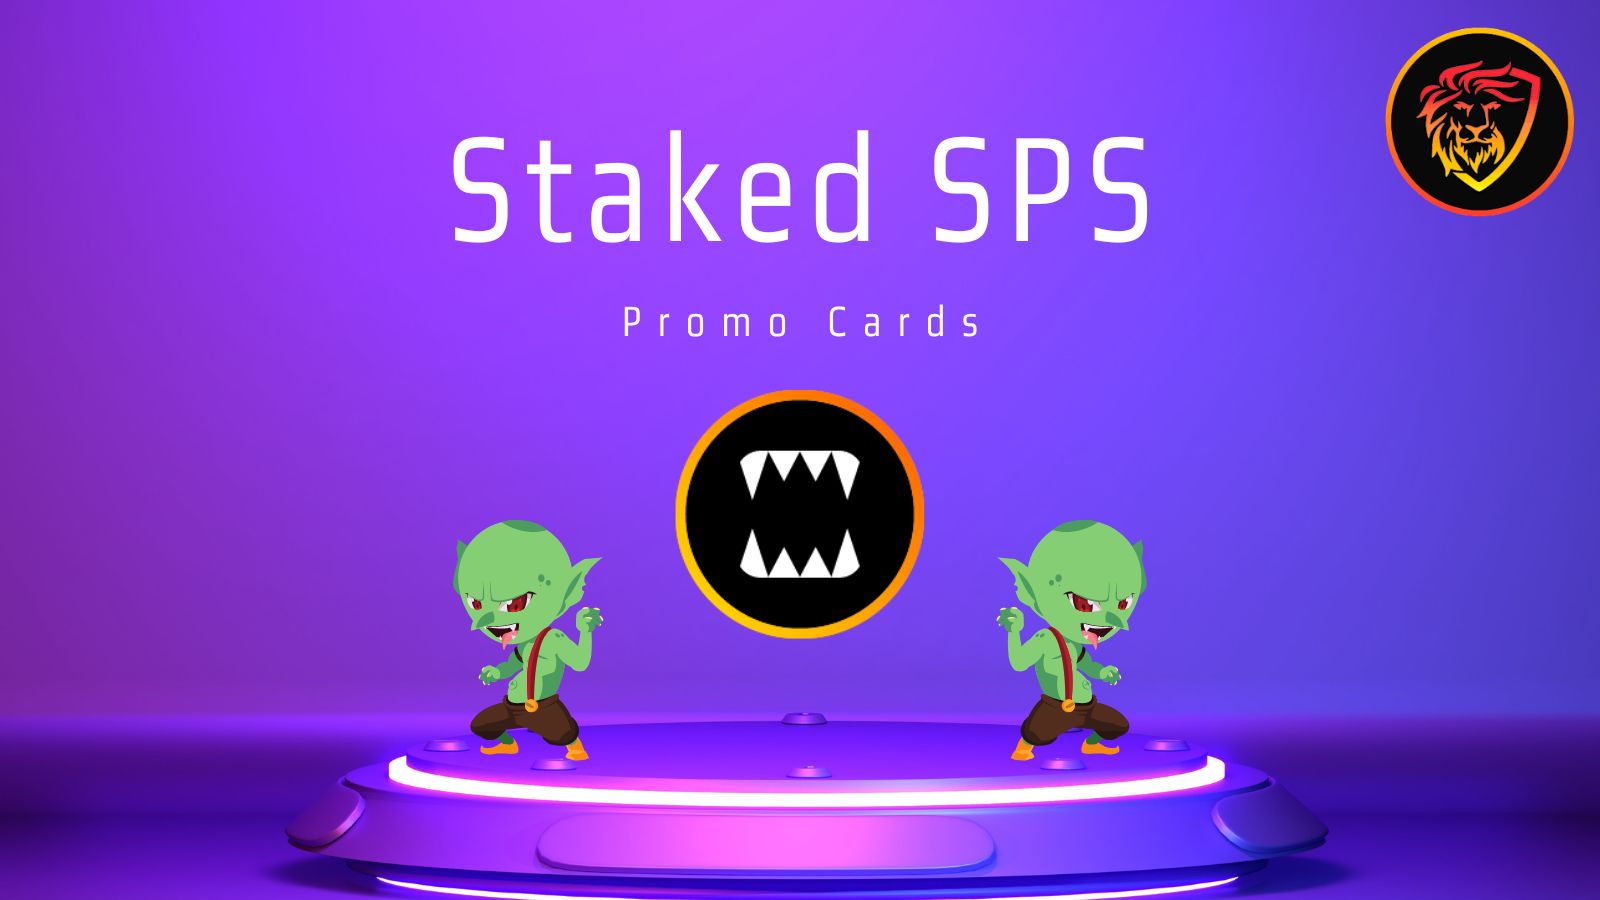 sps promo cards.jpg